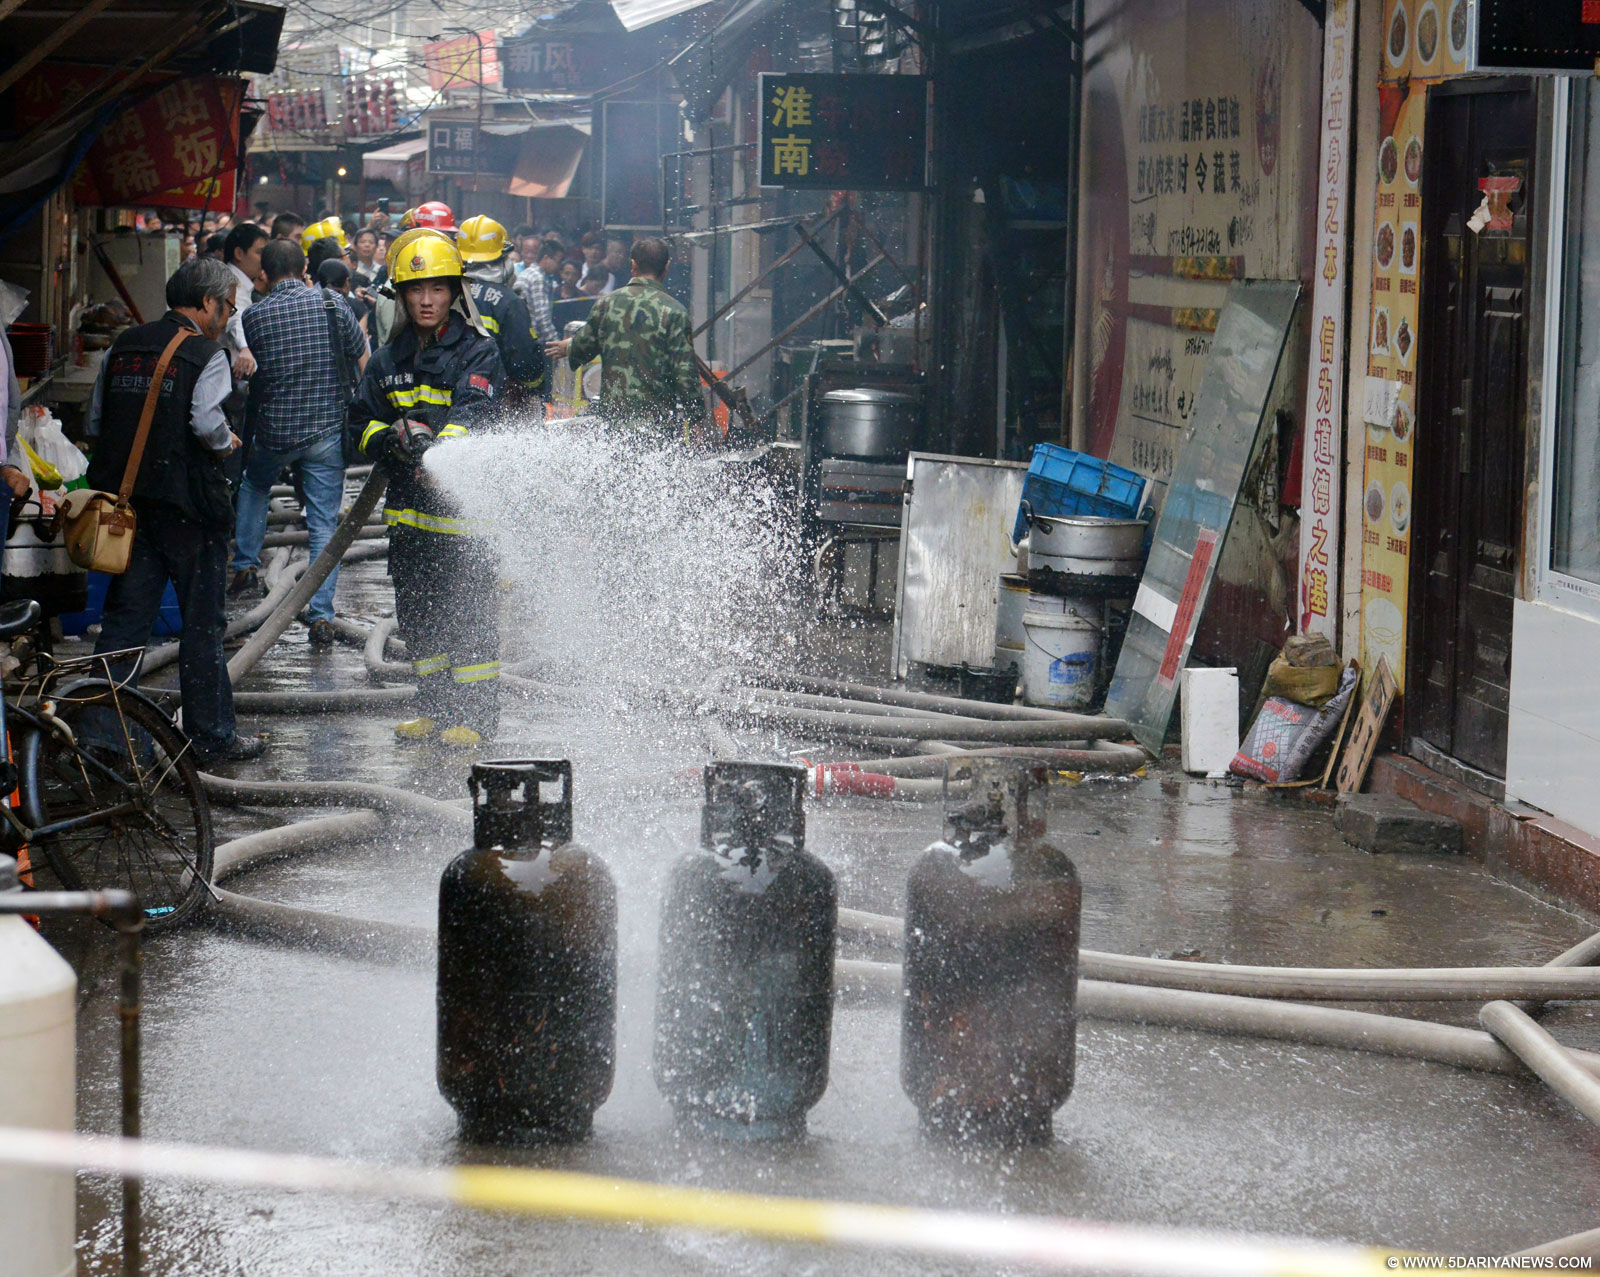 17 killed in China restaurant blast